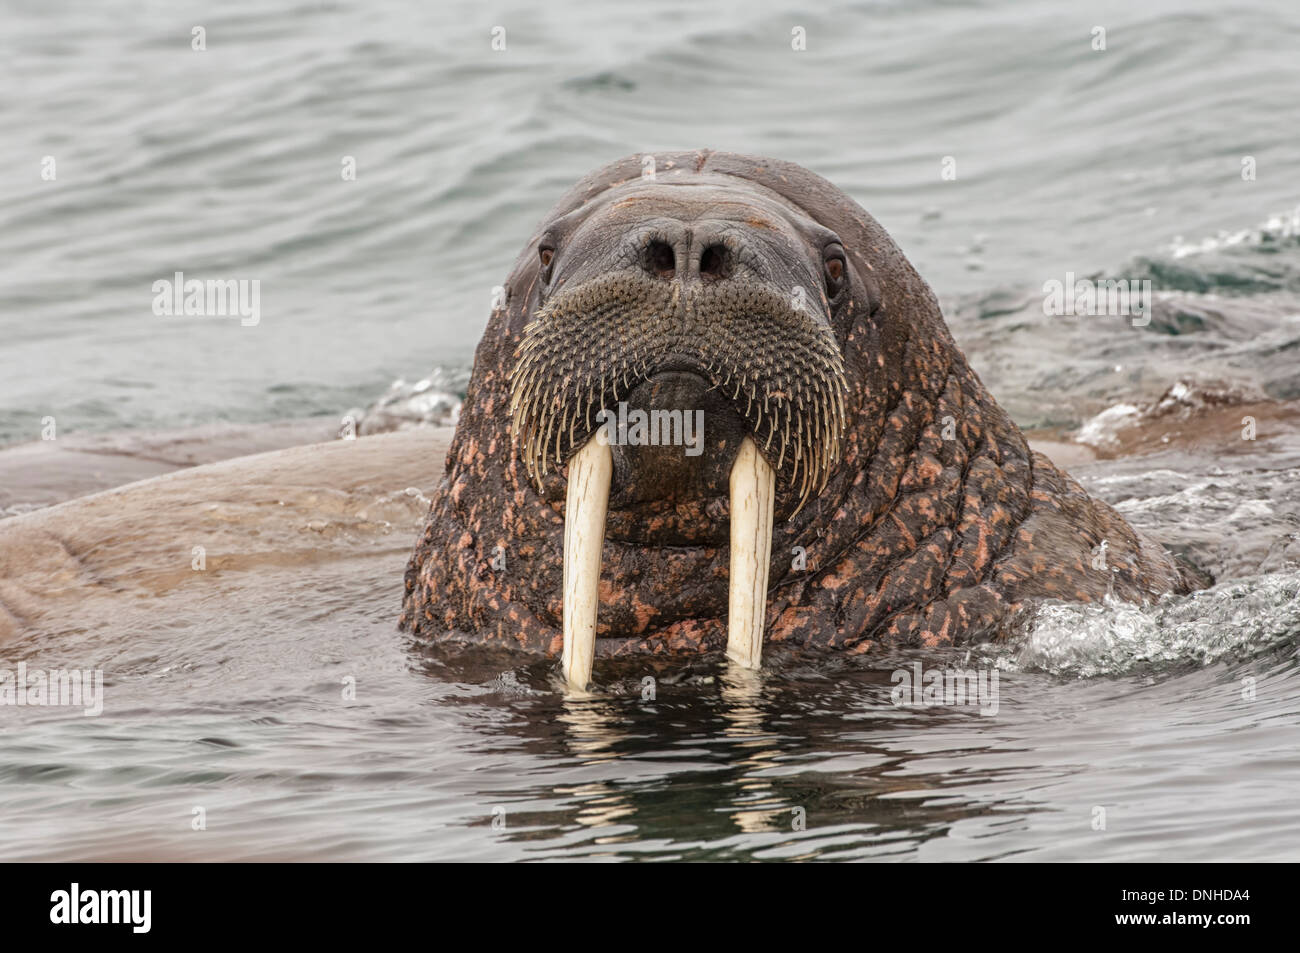 Walrus (Odobenus rosmarus), Torellneset Island, Svalbard Archipelago, Arctic Norway Stock Photo